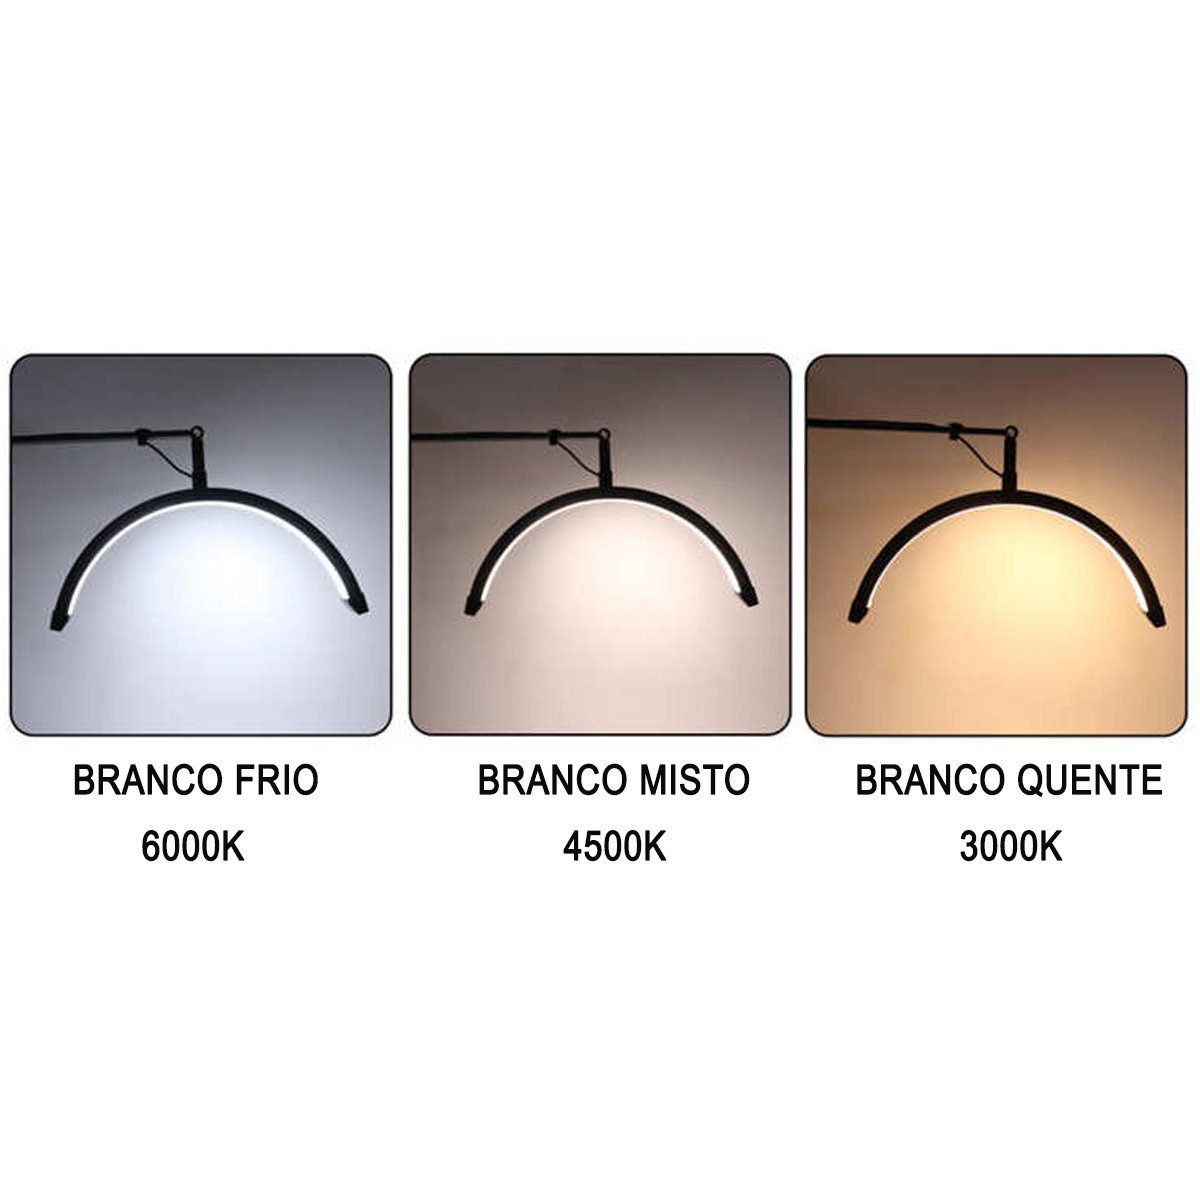 Luminaria Estetica Spa Arco Meia Lua Led 3 Tons Suporte Celular Mesa Salao de Beleza Manicure Limpez - 3